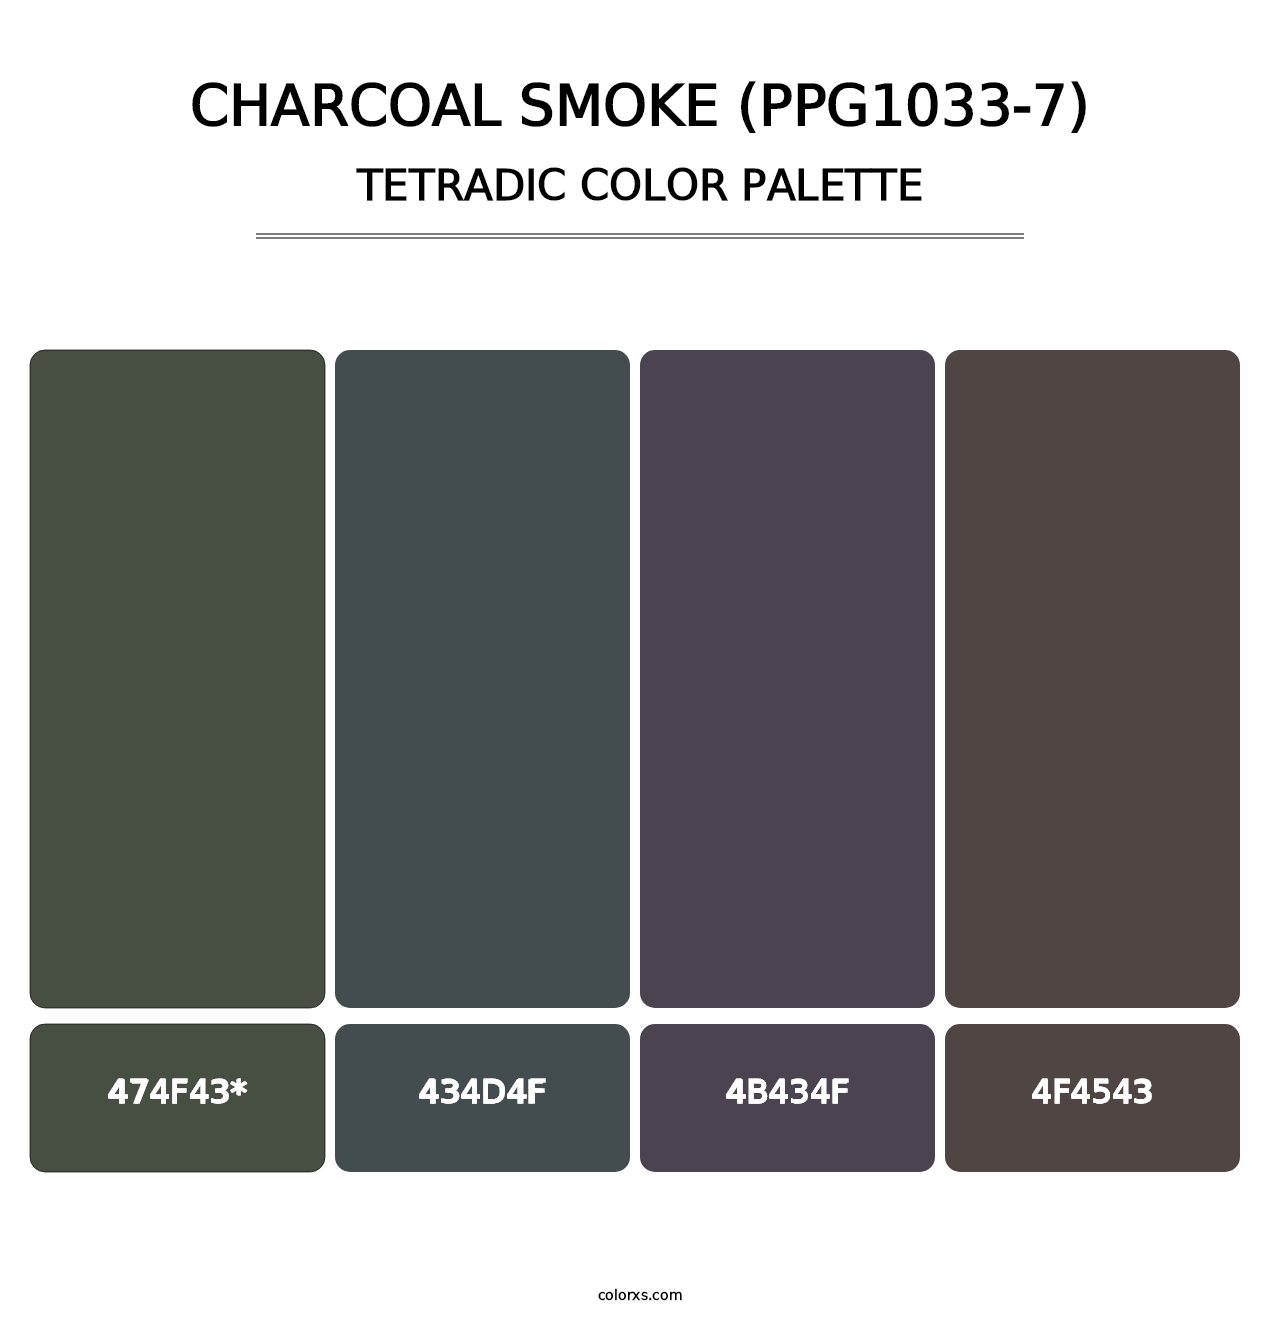 Charcoal Smoke (PPG1033-7) - Tetradic Color Palette